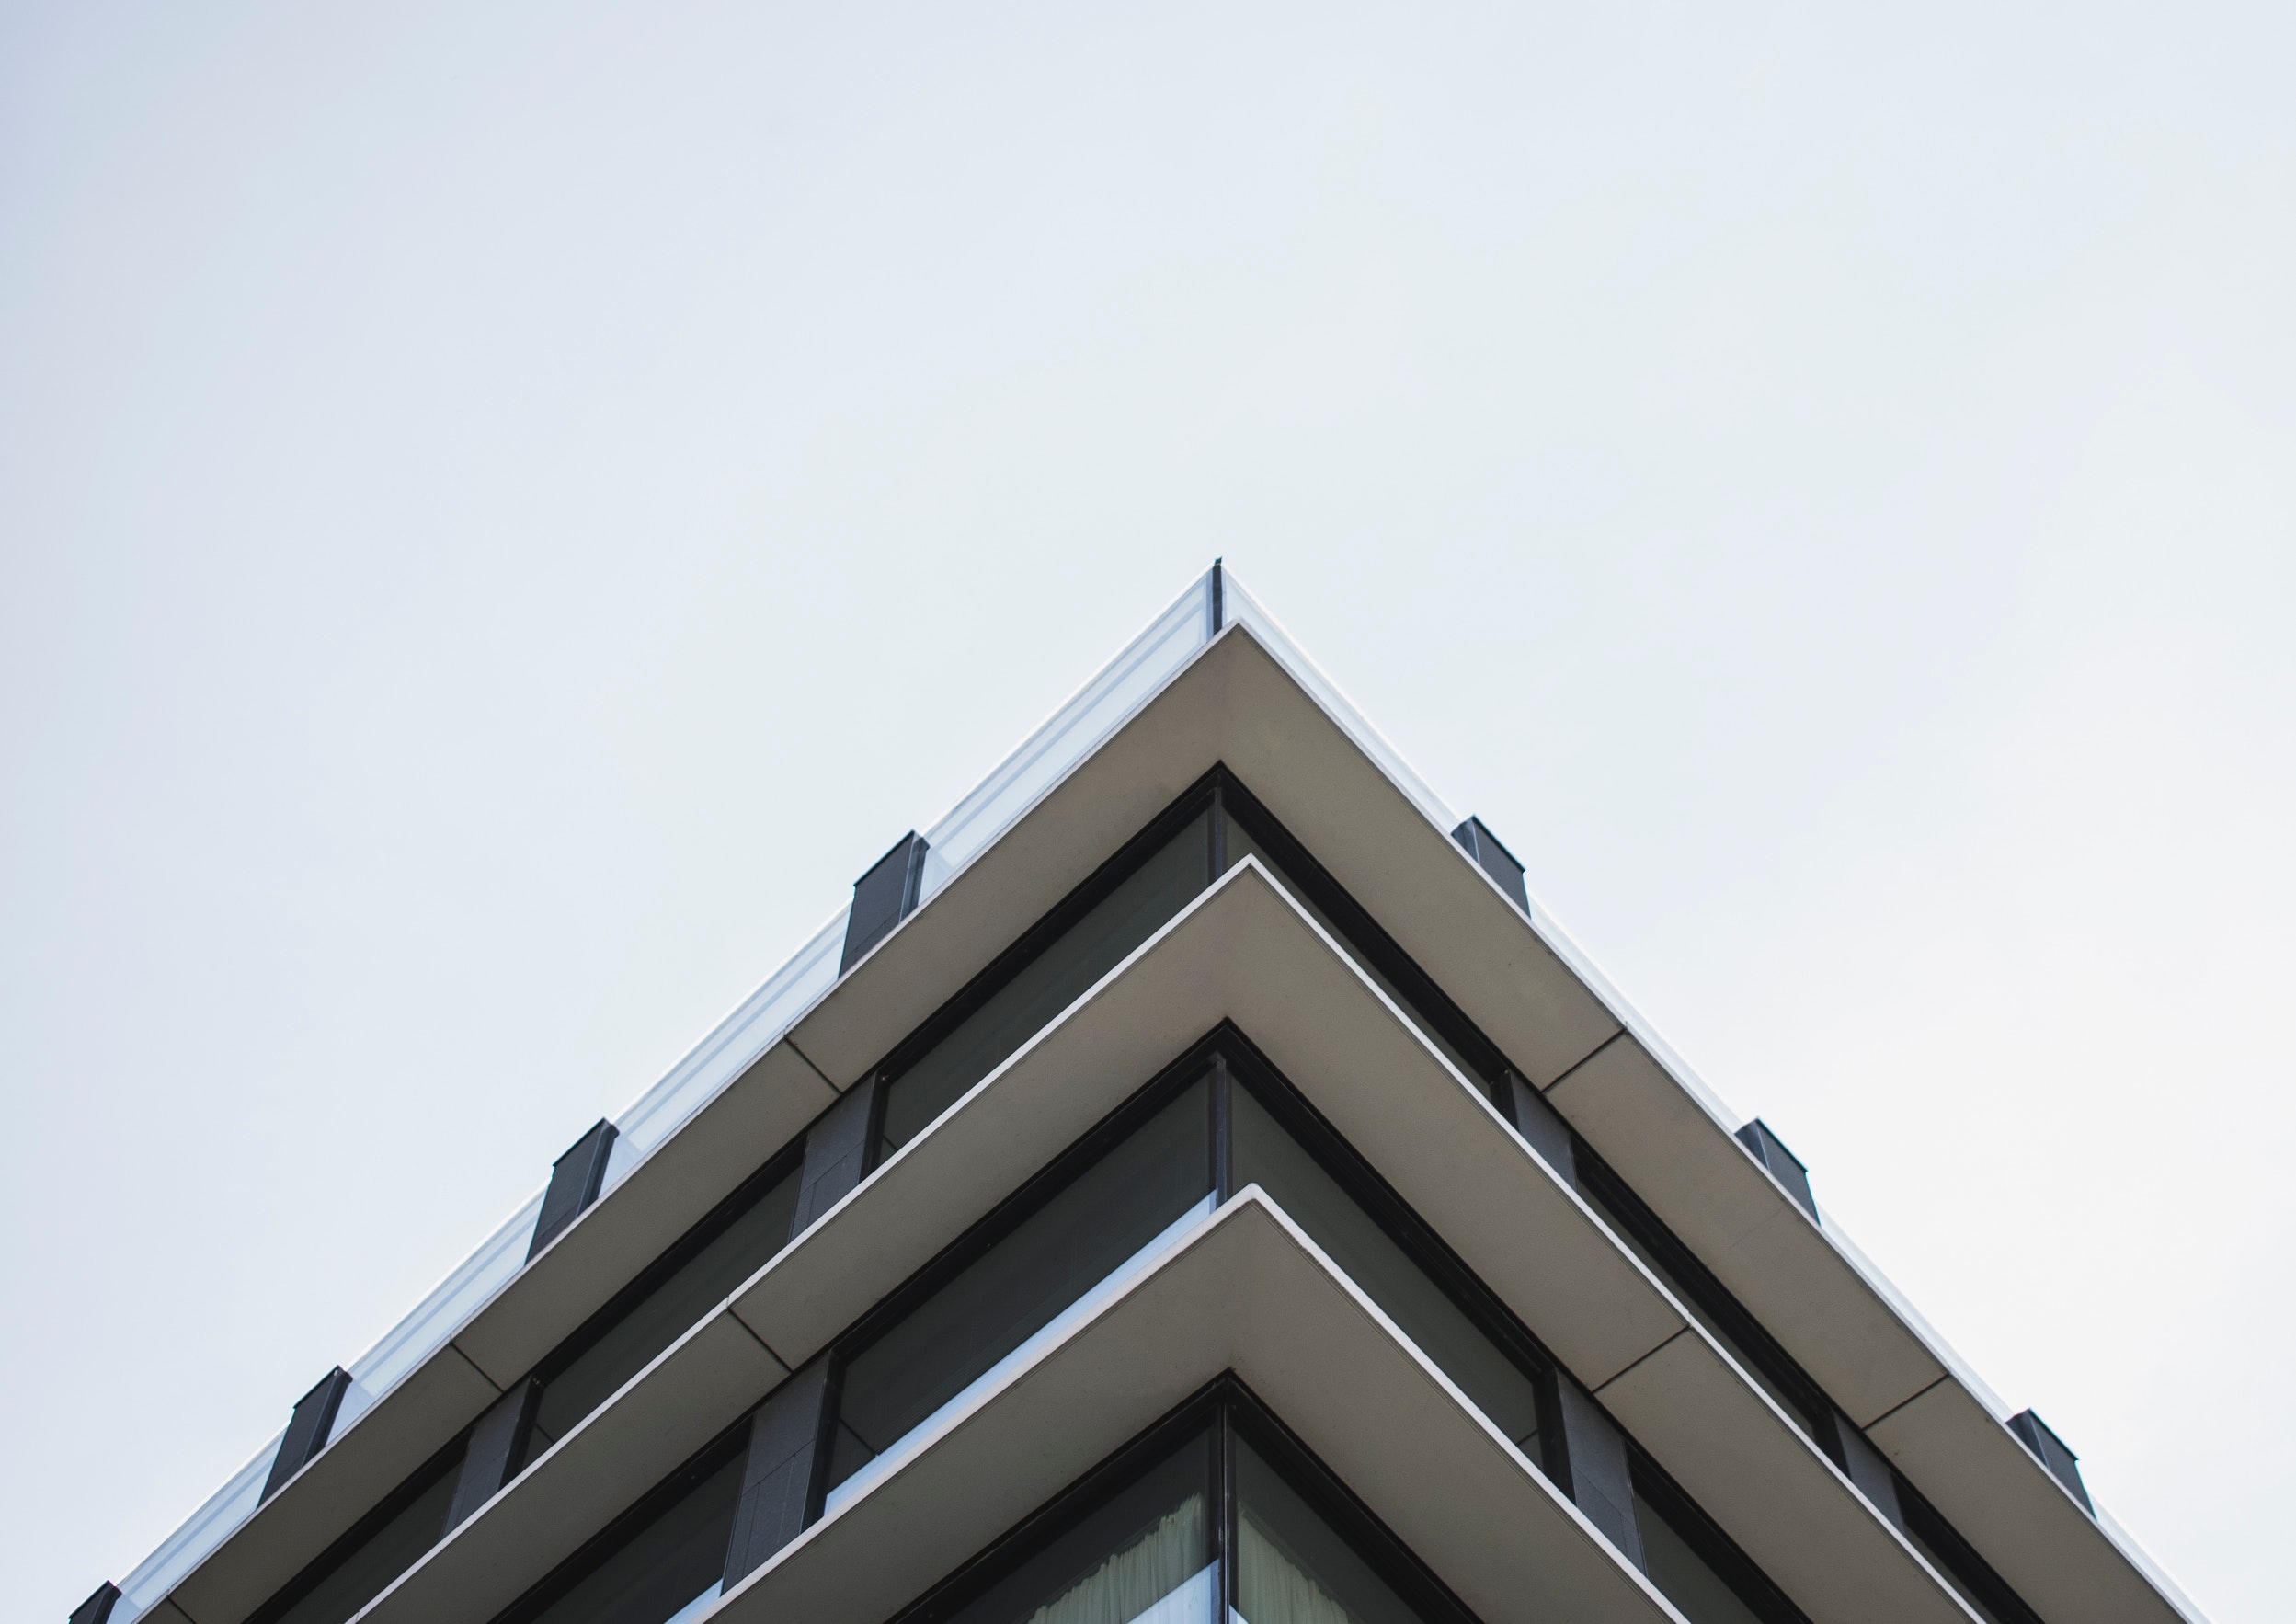 Low angle photo of a white concrete building